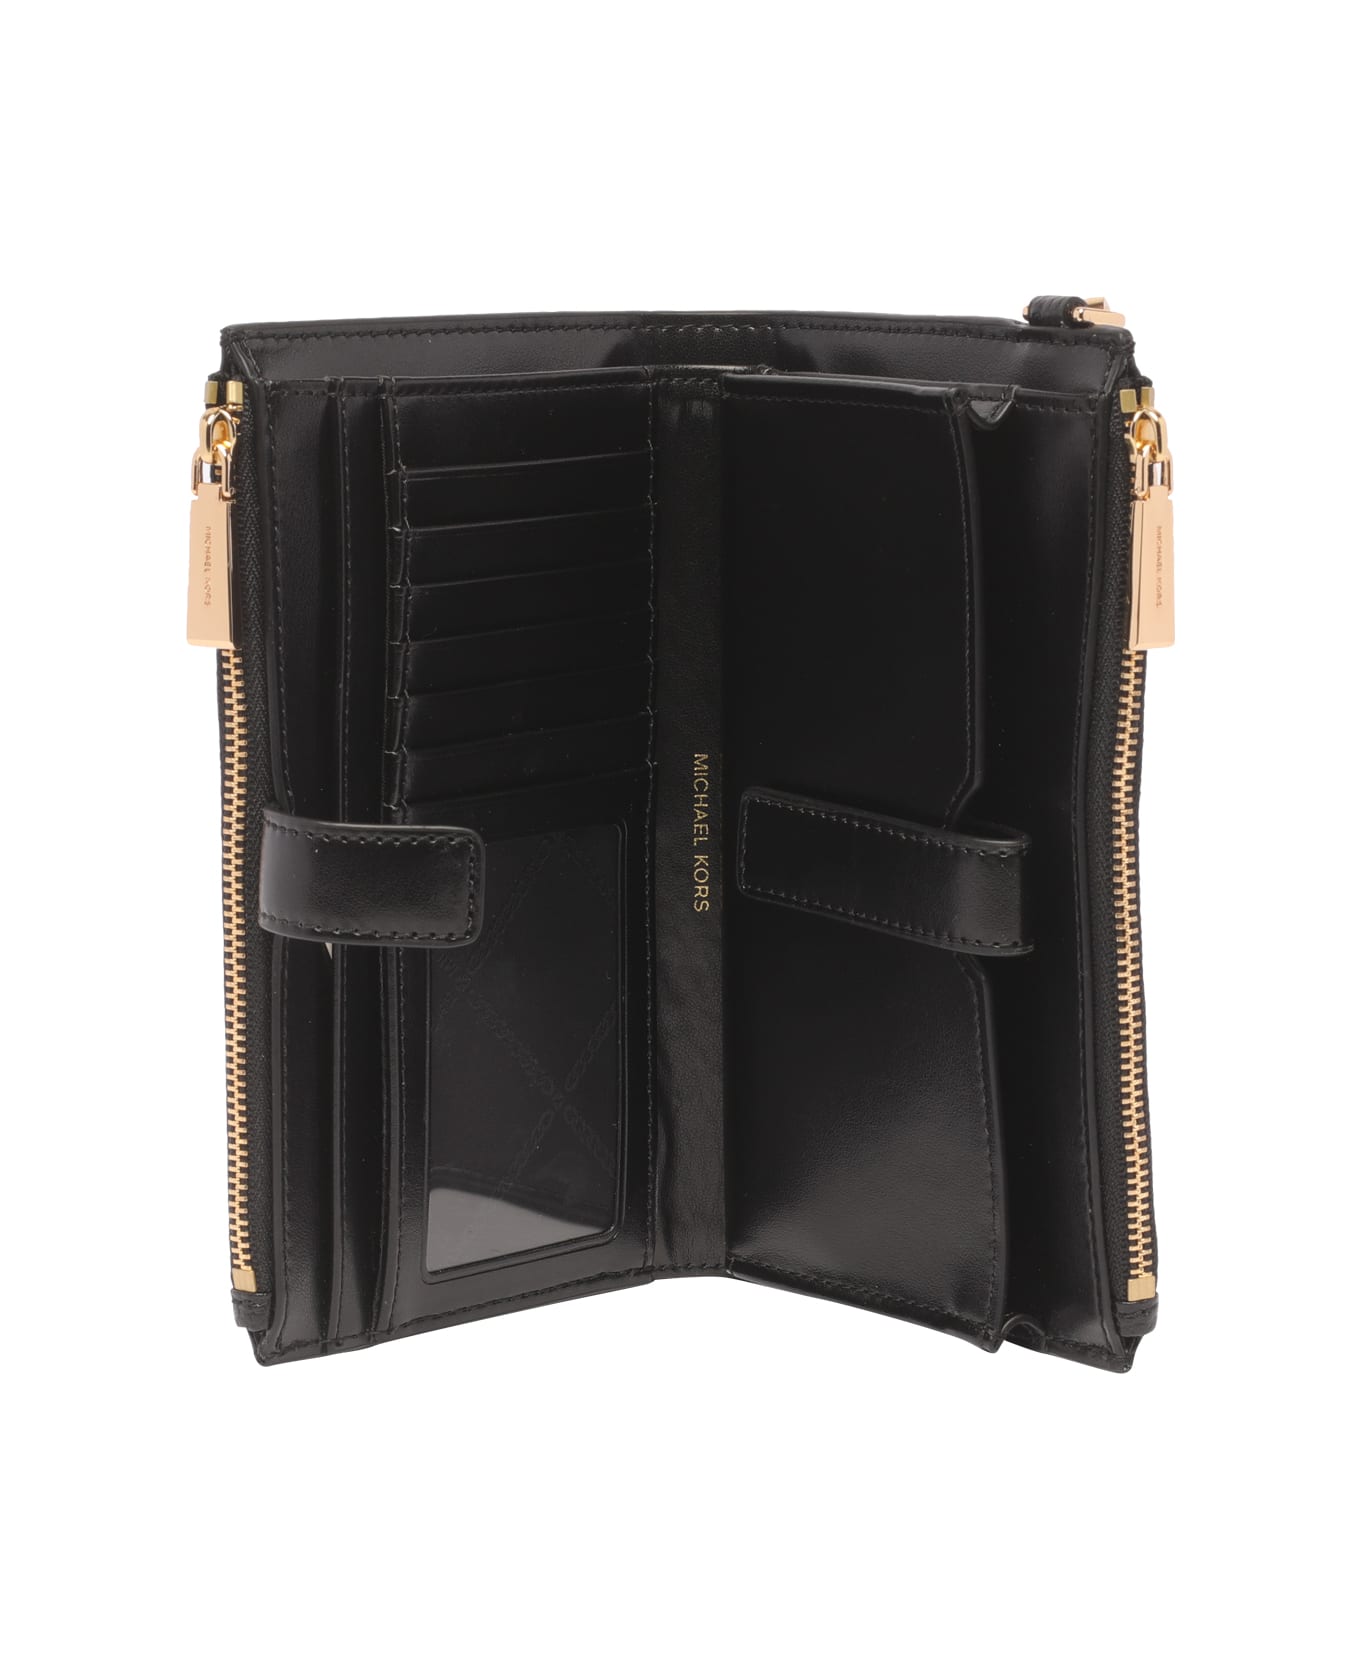 Michael Kors Collection Jet Set Wallet - Black